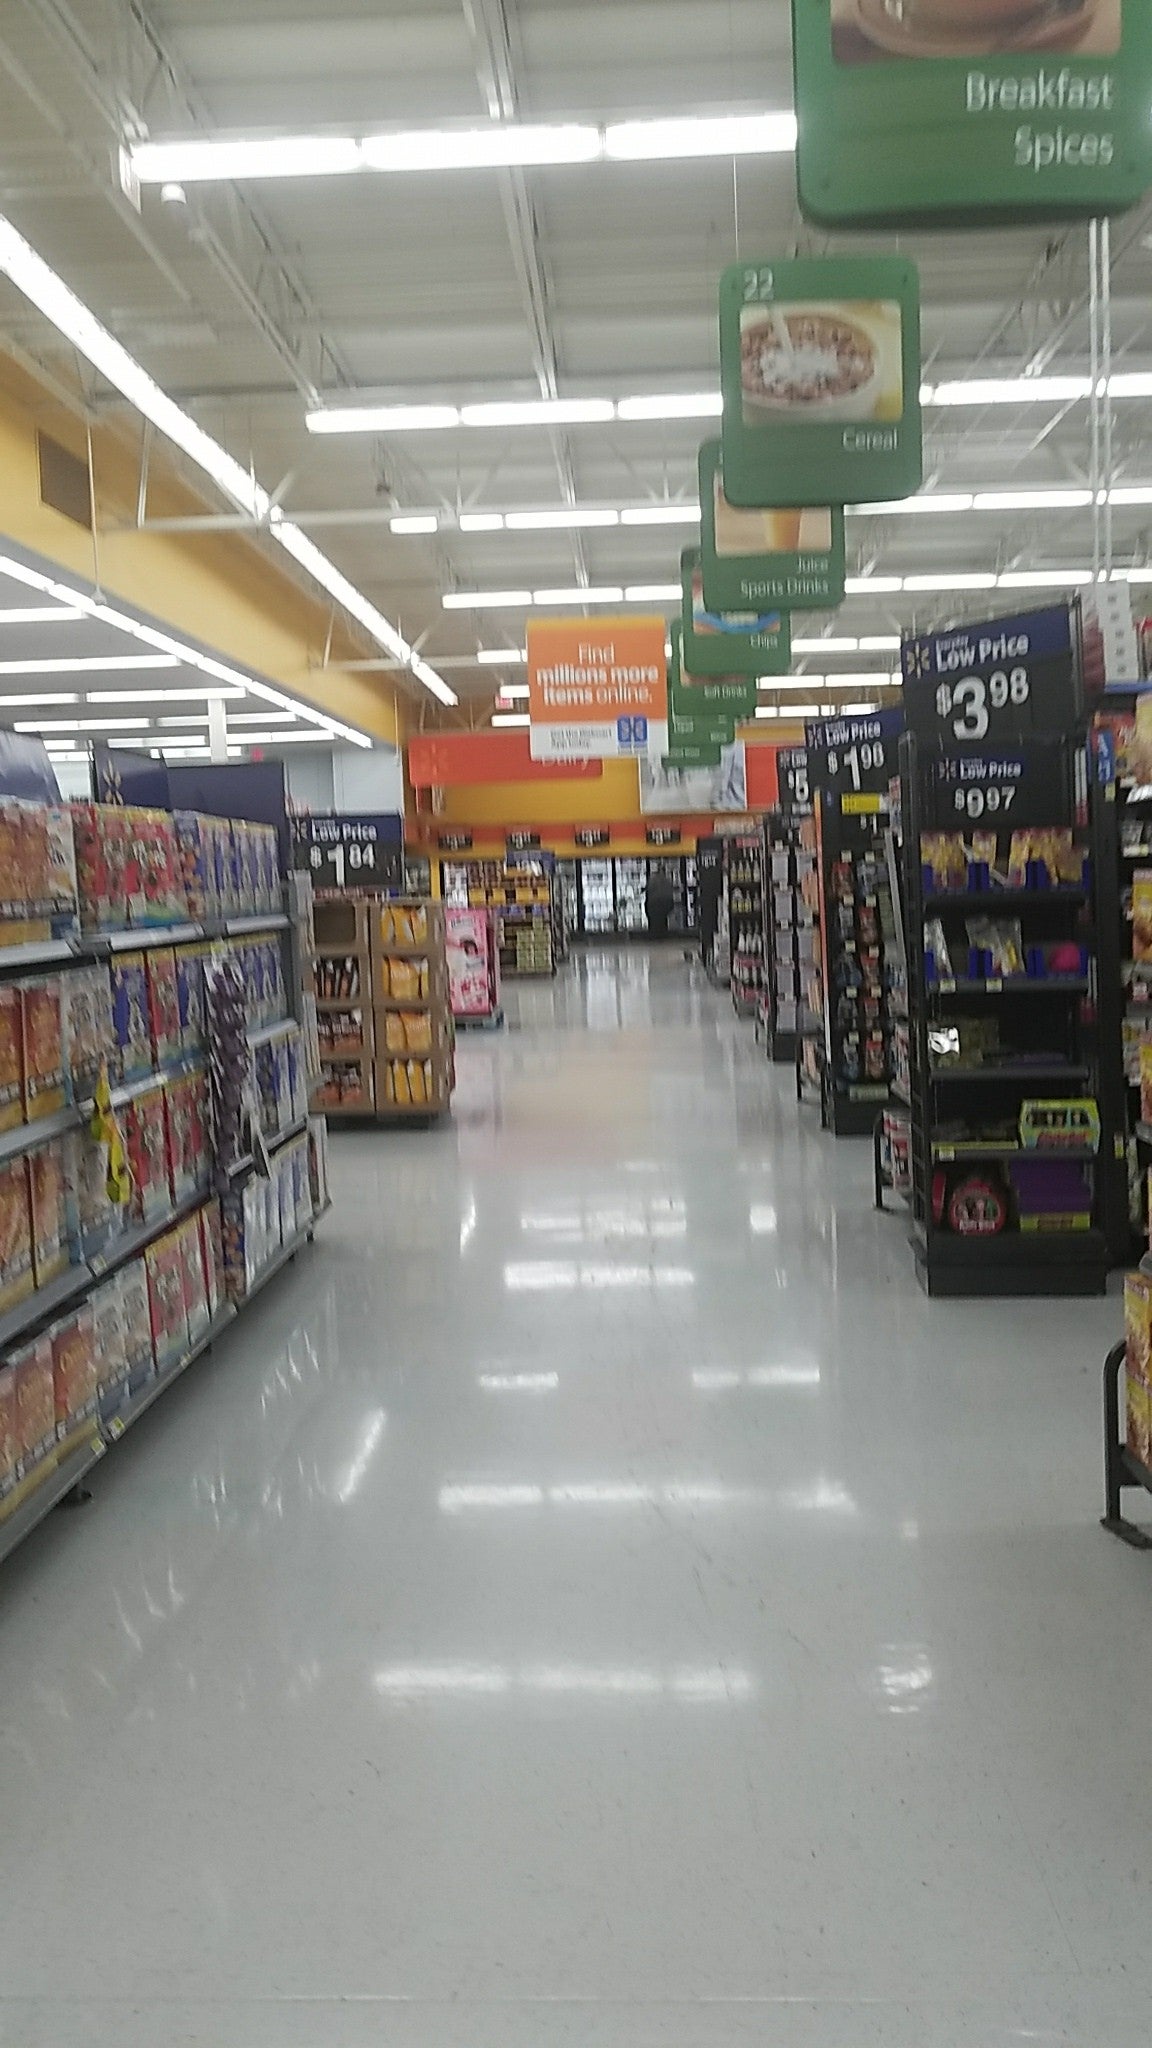 Walmart Grocery Checkout Line in Gladstone, Missouri